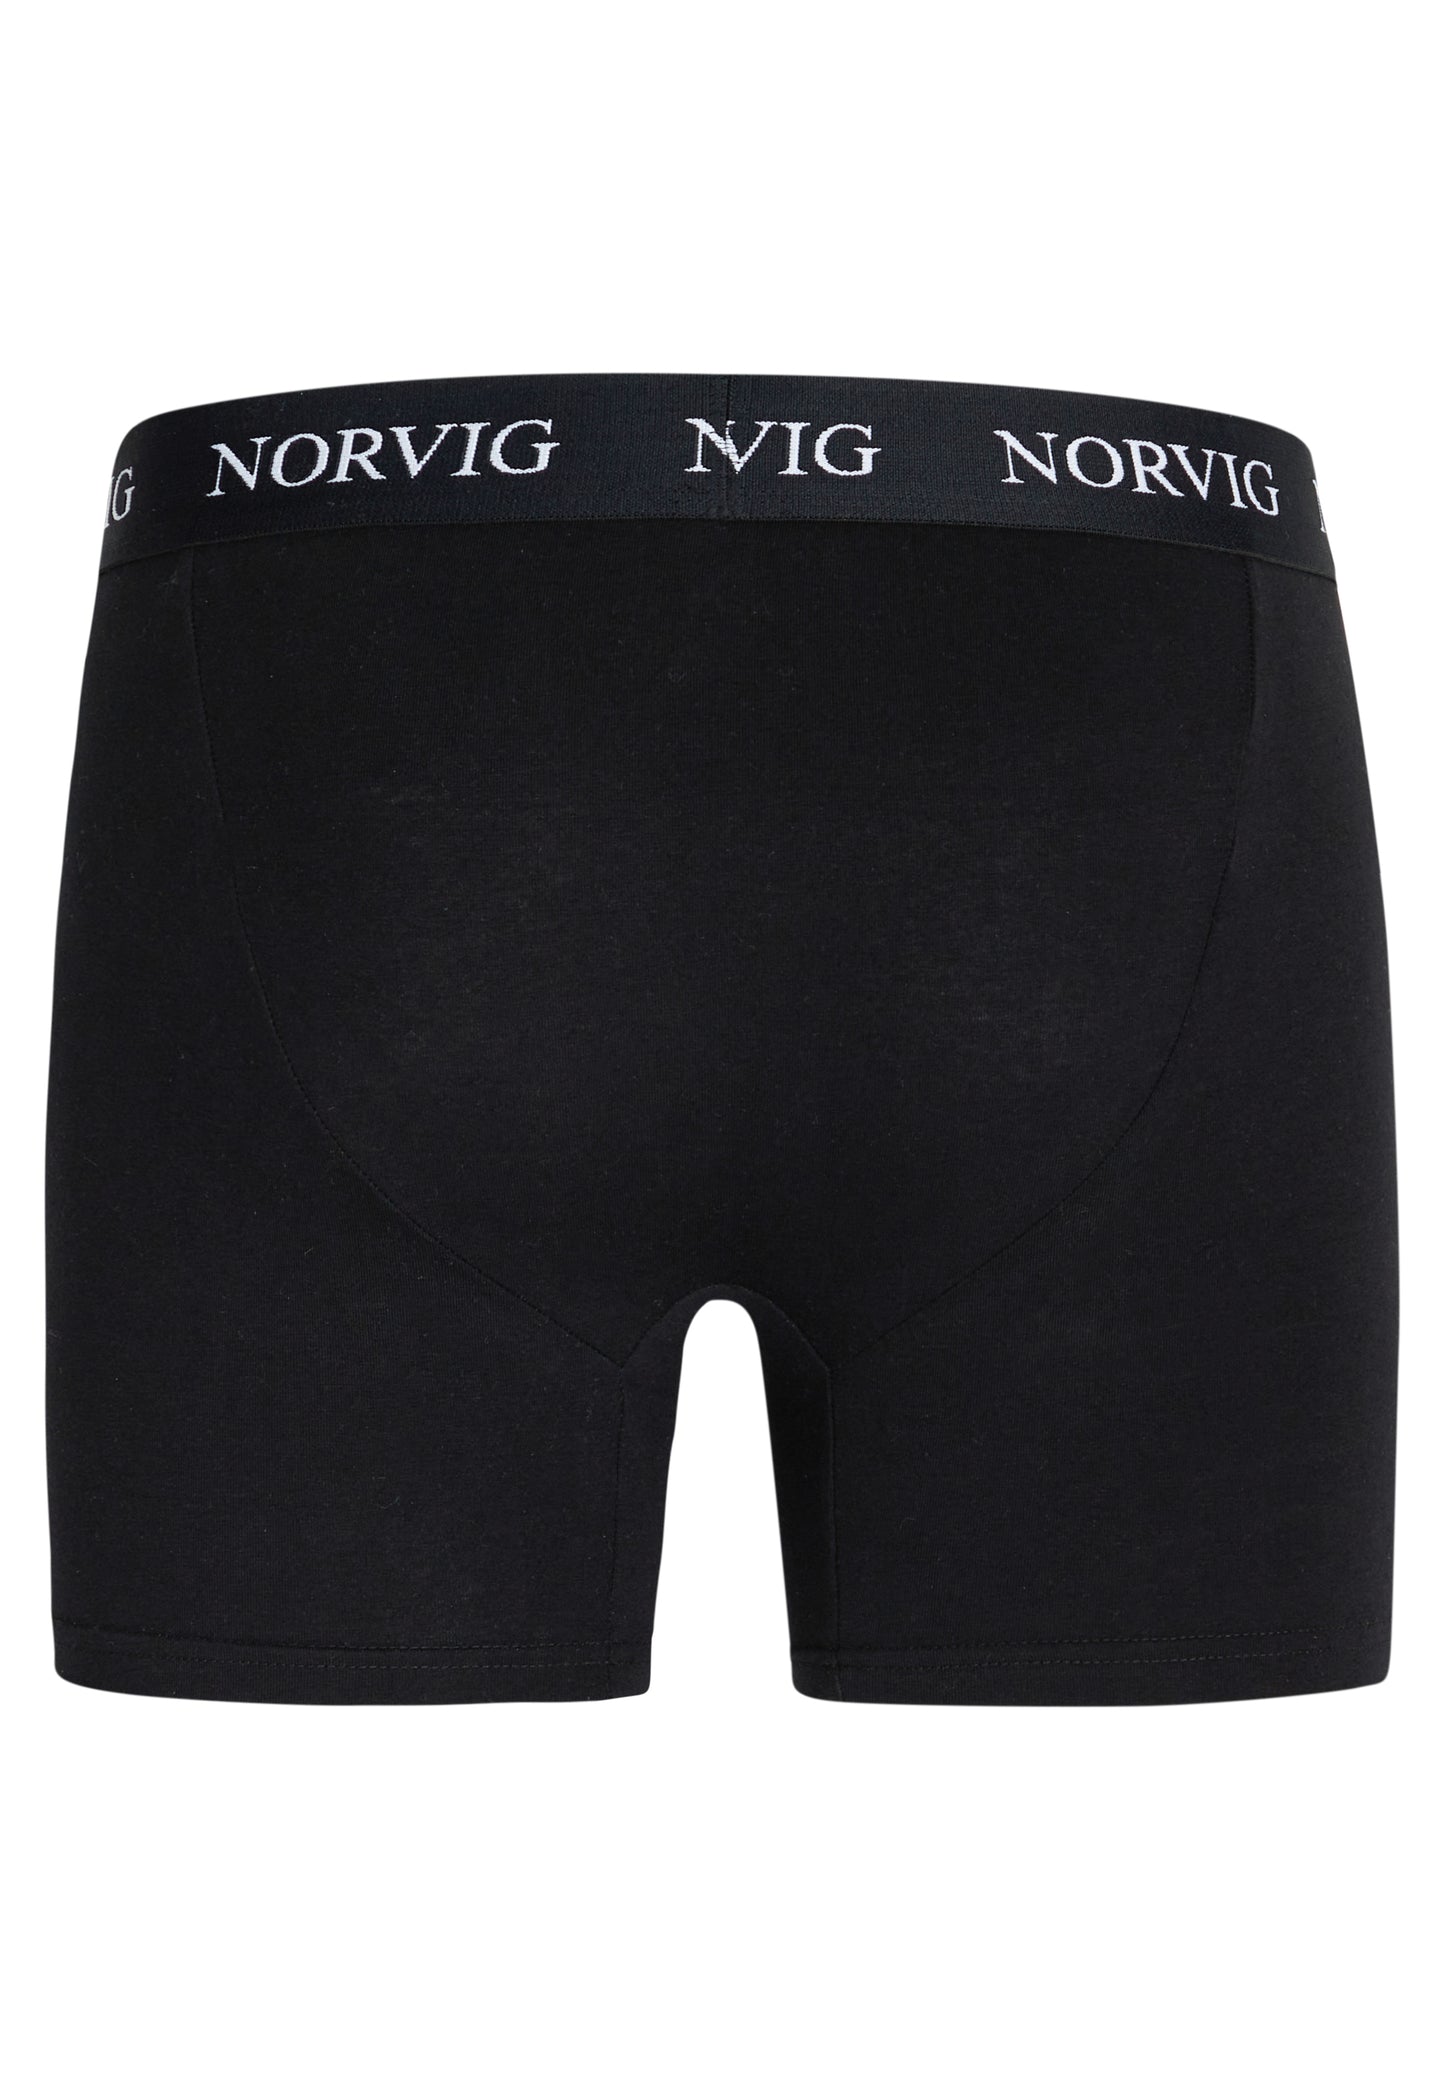 NORVIG 3-pak Tights sort/navy